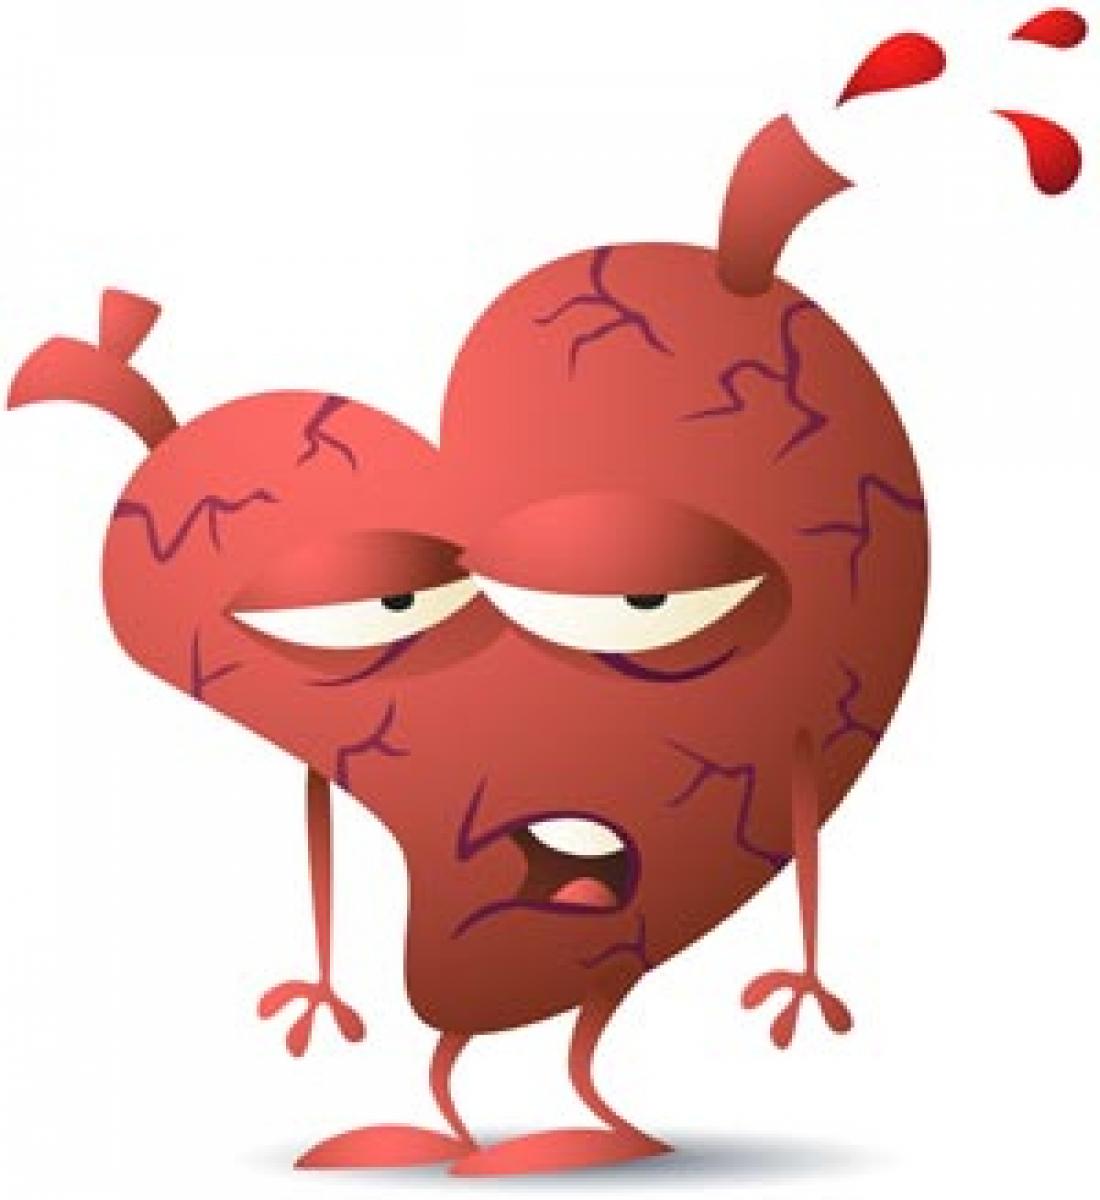 New culprit for heart diseases identified